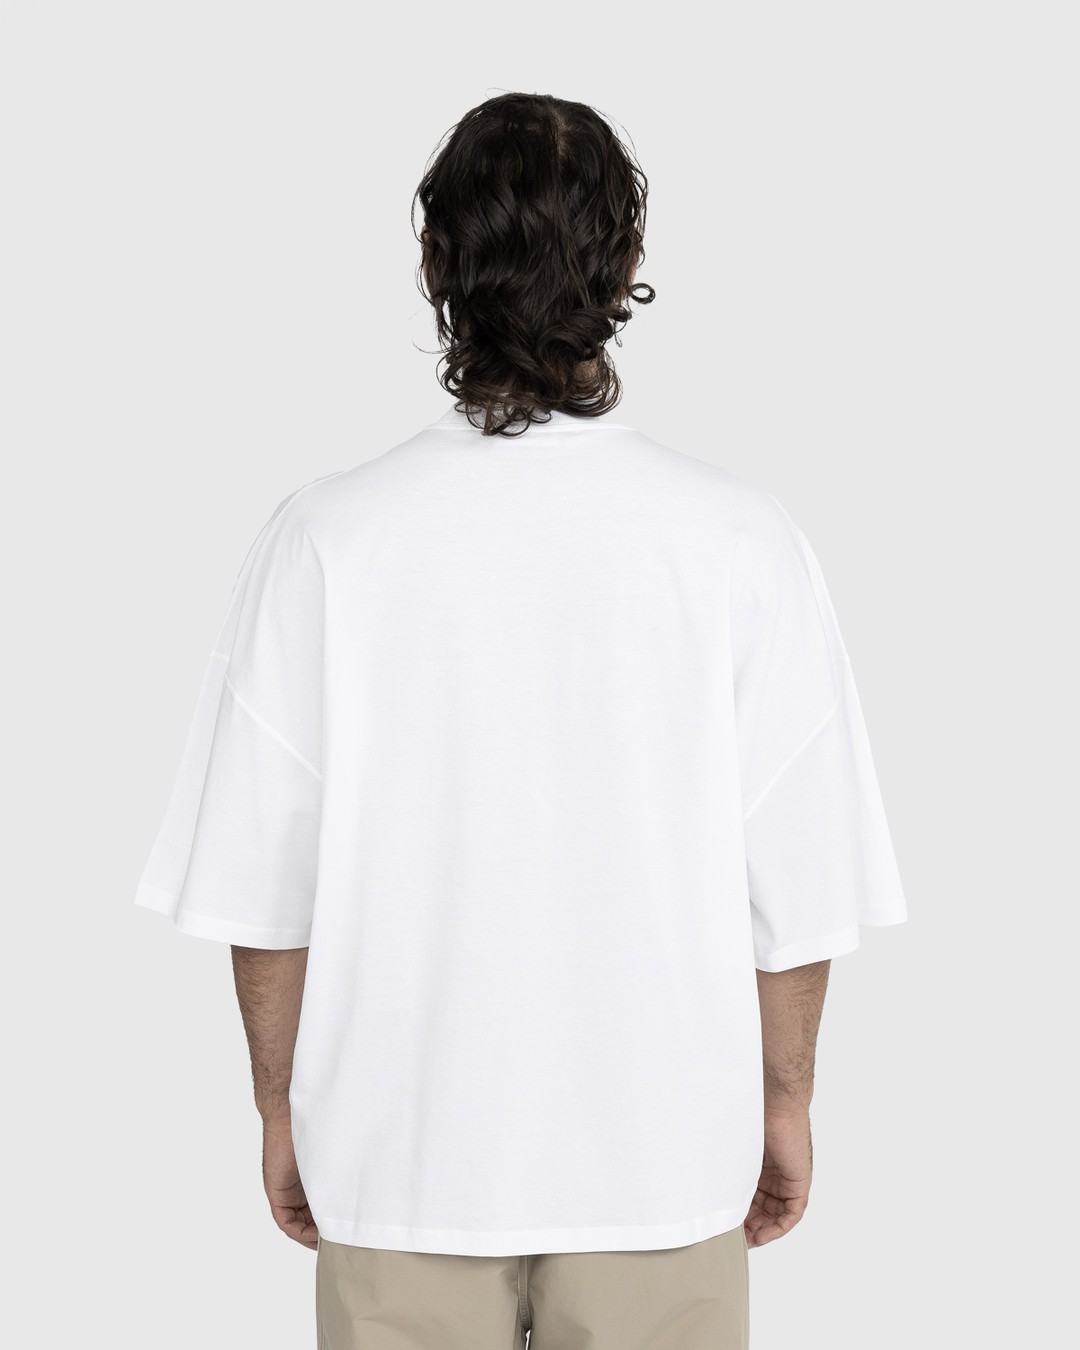 Meevoelen toernooi Garantie Jil Sander – Mock Neck T-Shirt White | Highsnobiety Shop